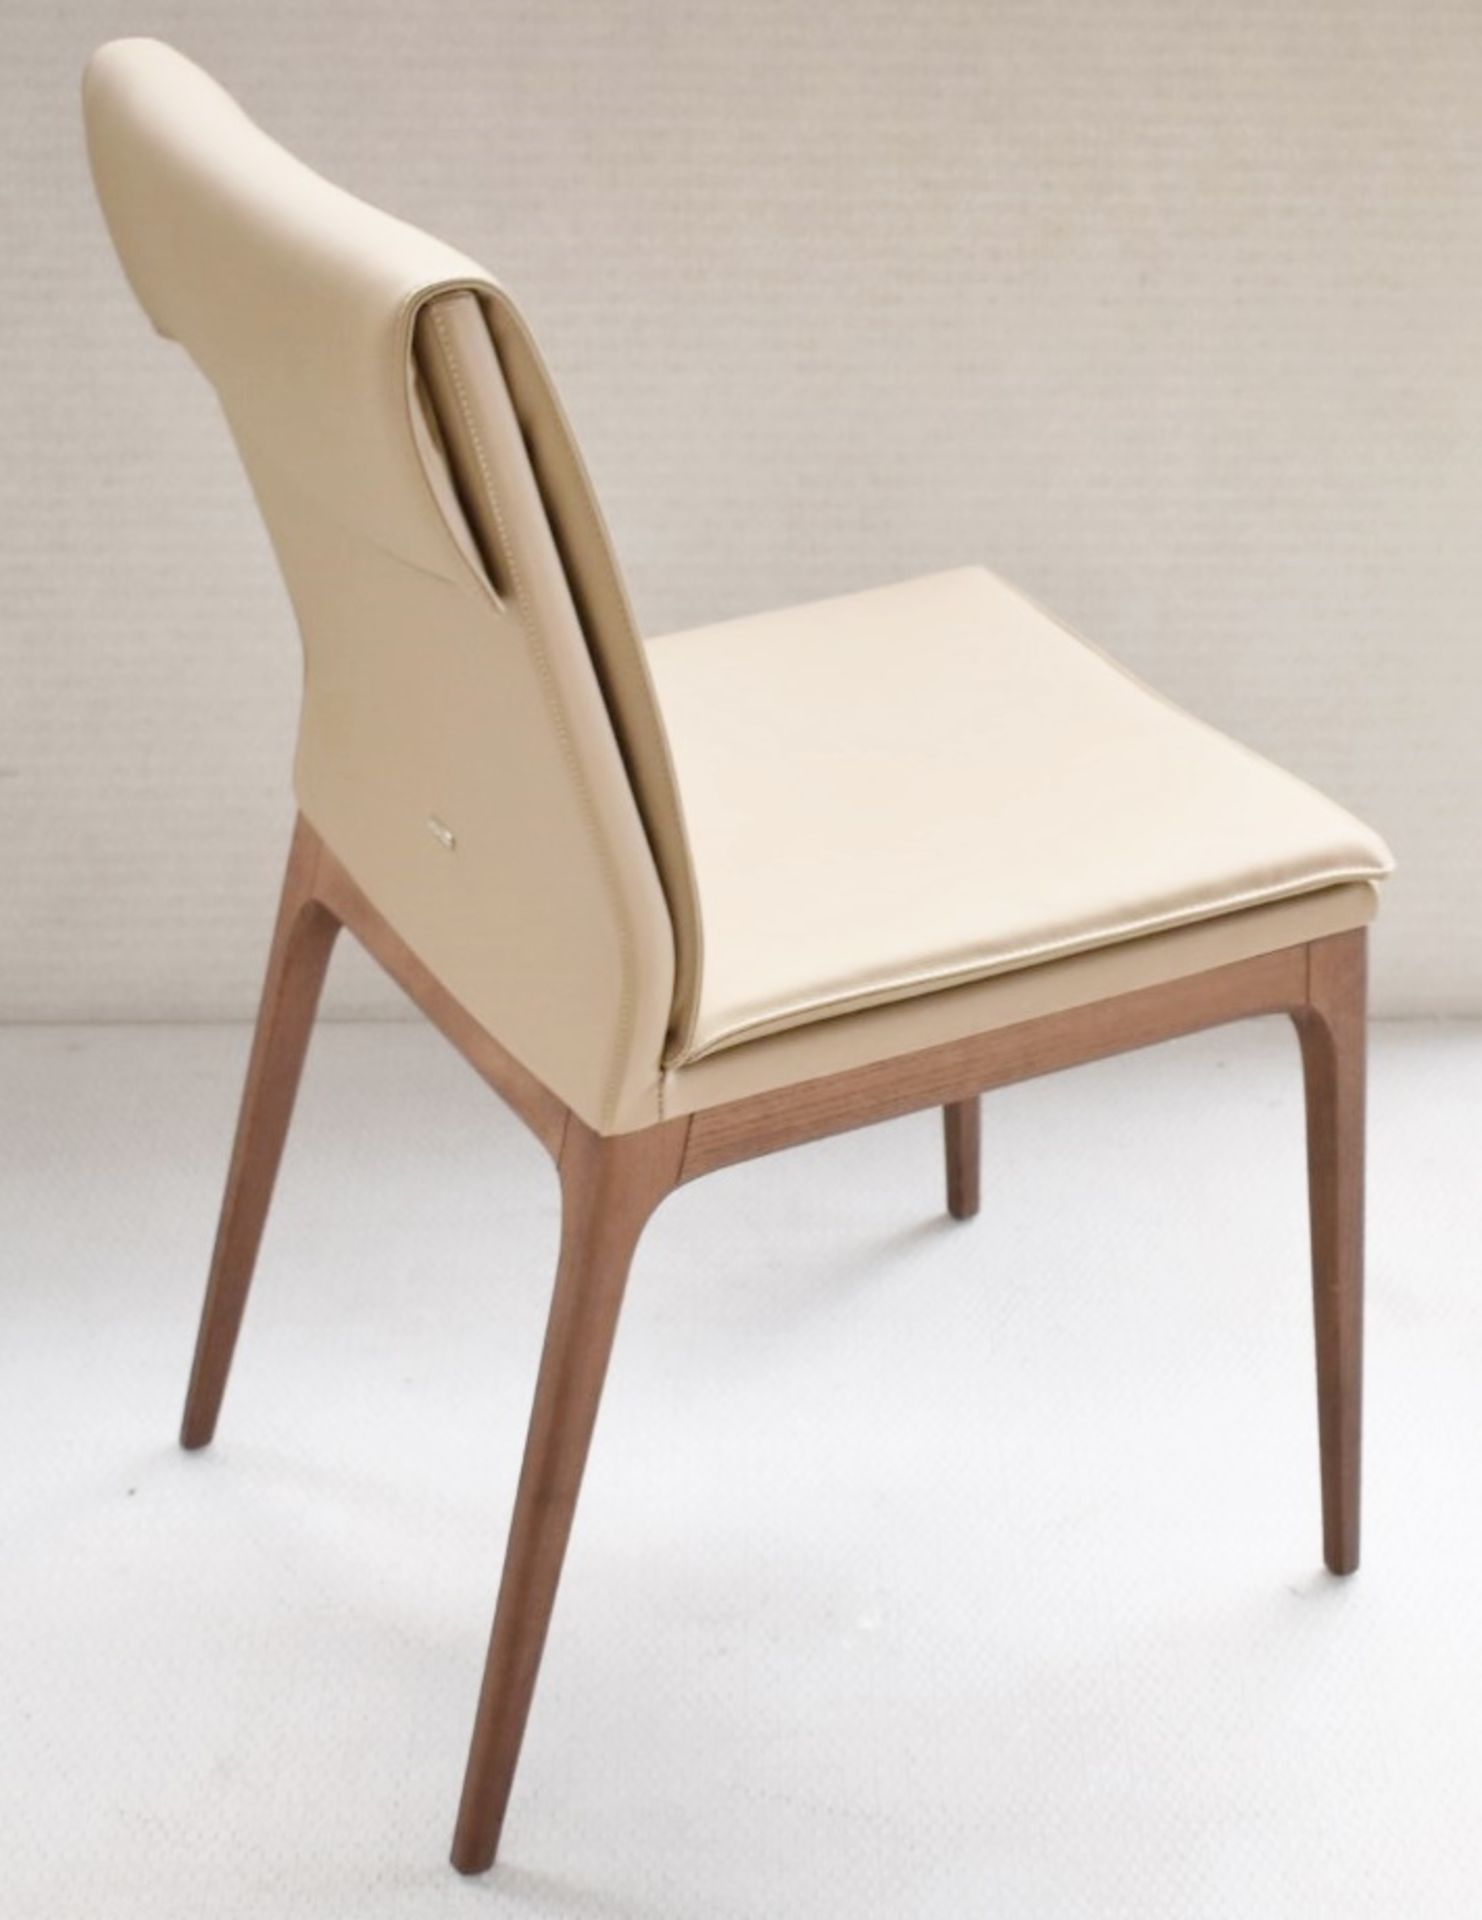 1 x CATTELAN ITALIA 'Sofia' Leather Upholsted Designer Chair - Original RRP £520.00 - Ref: 4934658/ - Image 3 of 9